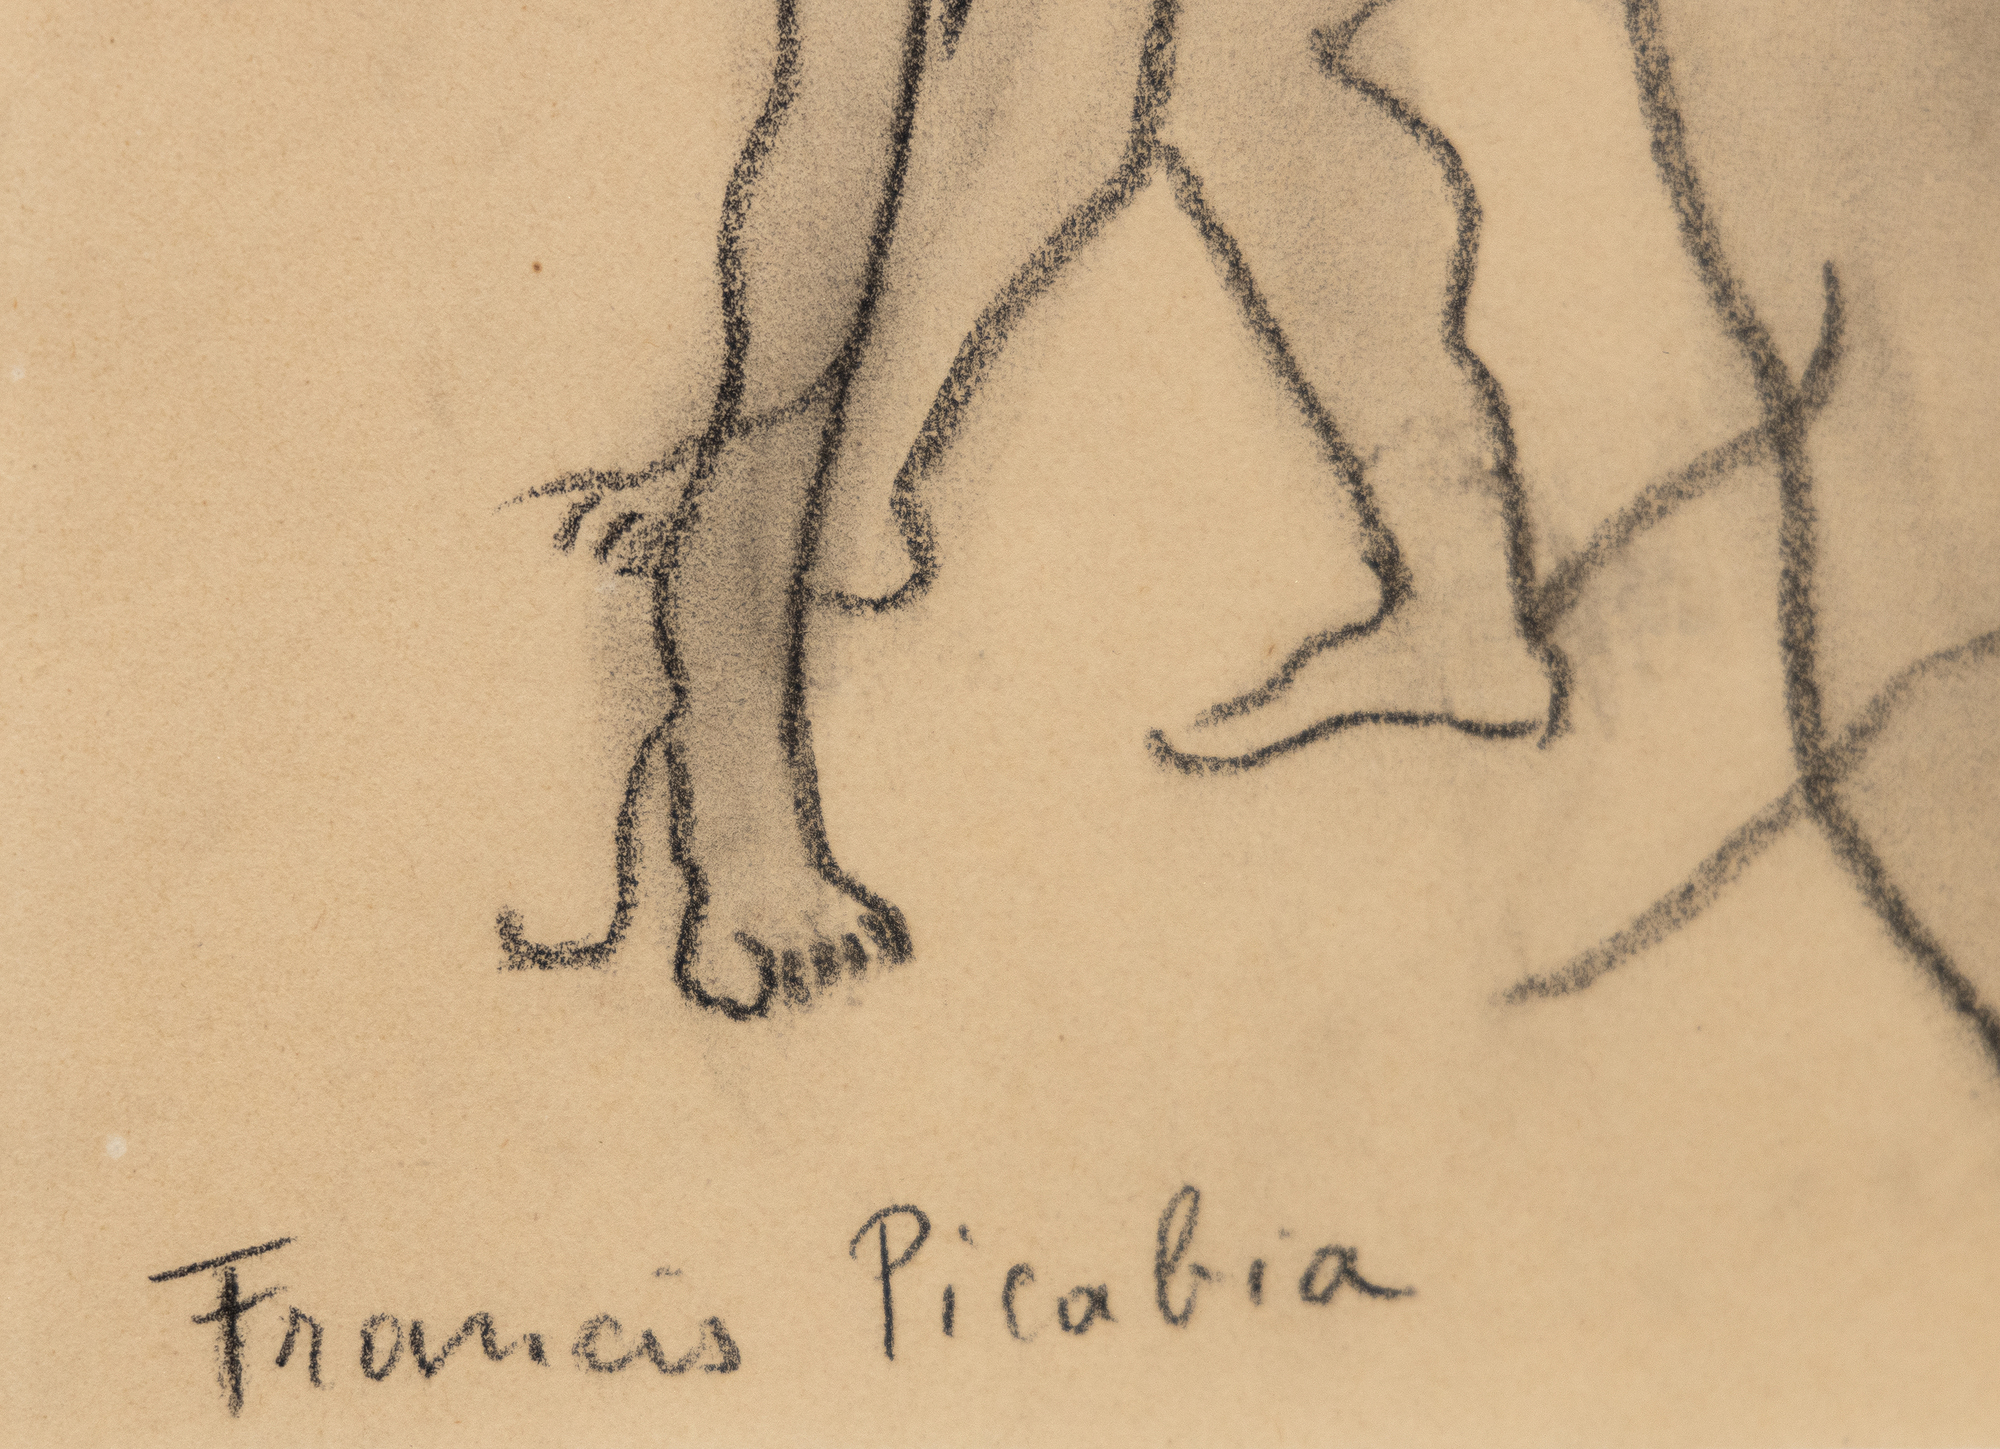 FRANCIS PICABIA - Trois personnages nus - schwarze Konterfei-Kreide auf chamoisfarbenem Papier - 11 1/2 x 8 in.